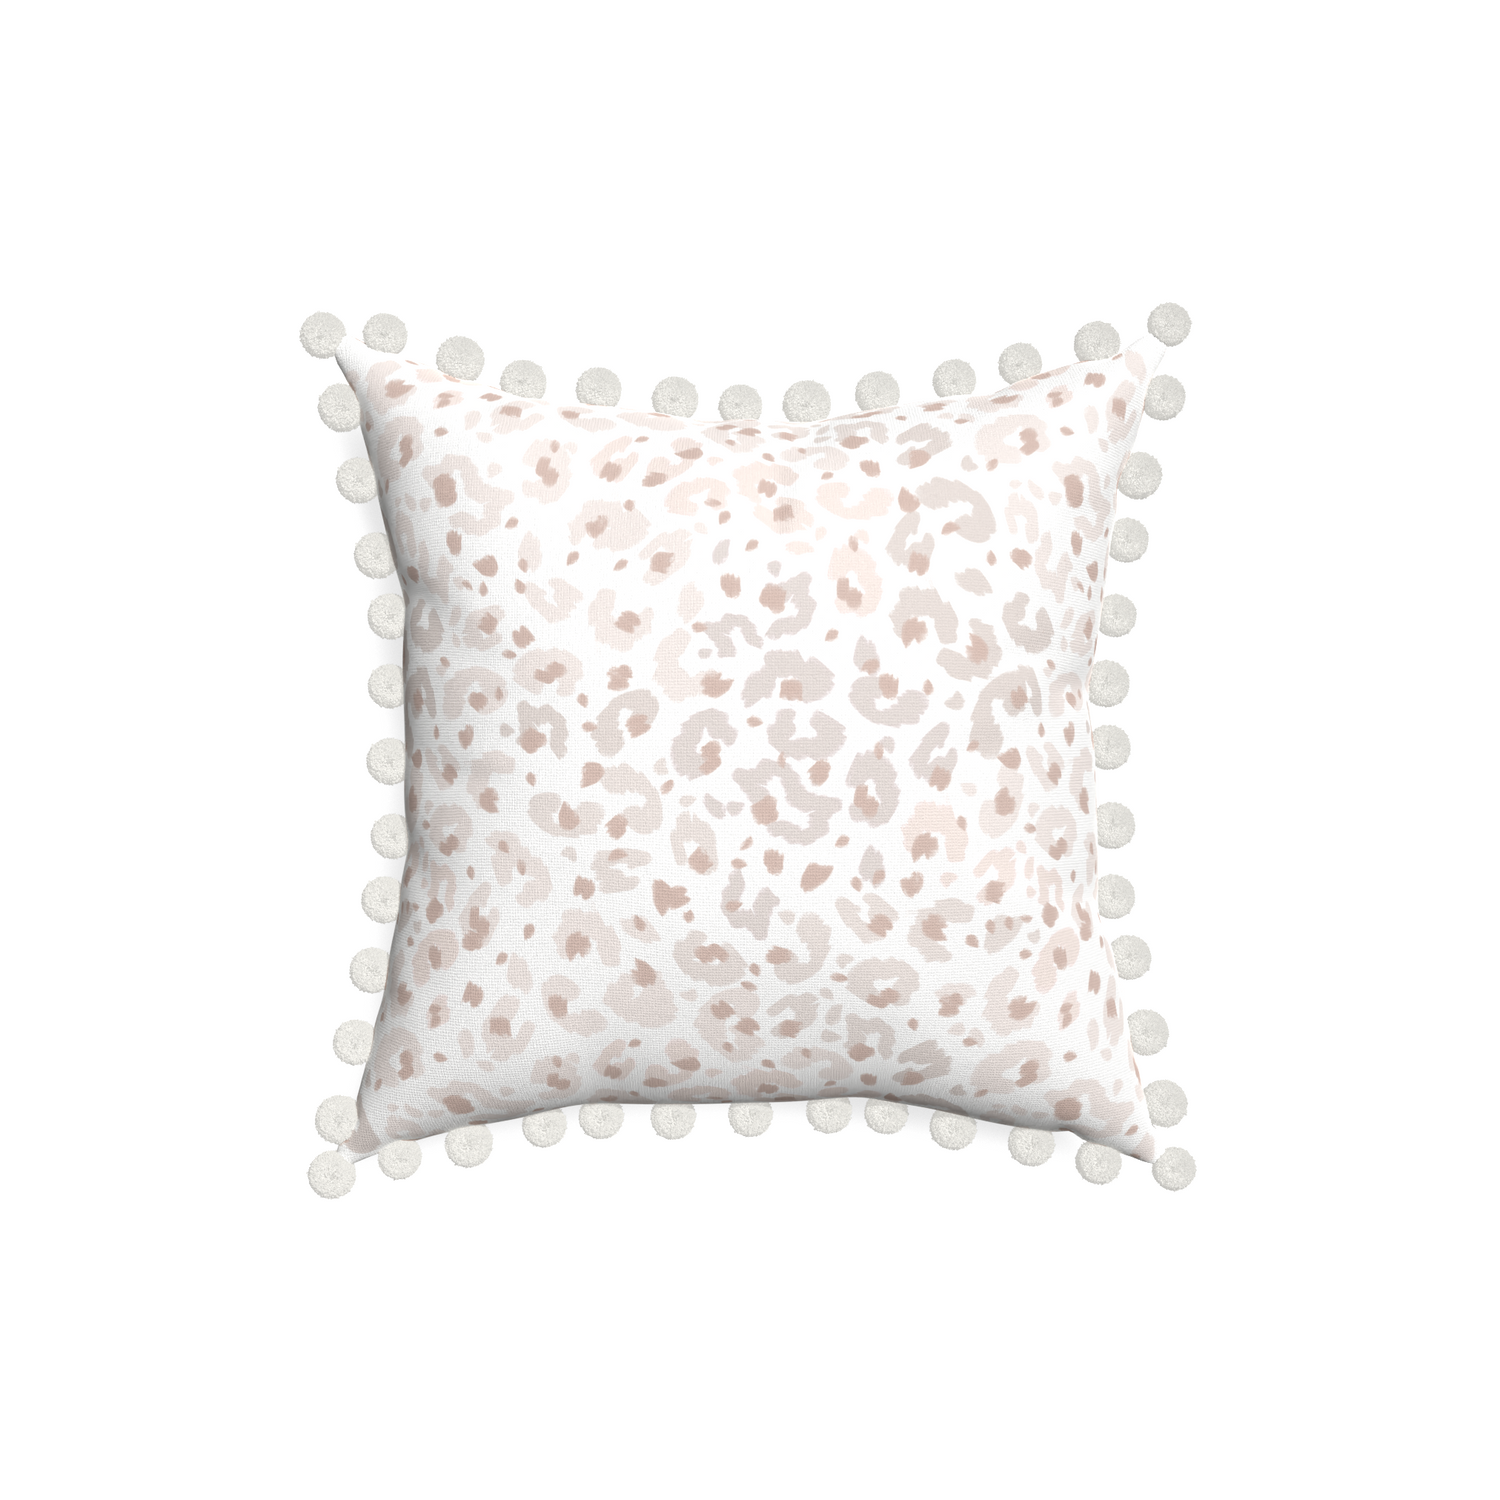 18-square rosie custom pillow with snow pom pom on white background